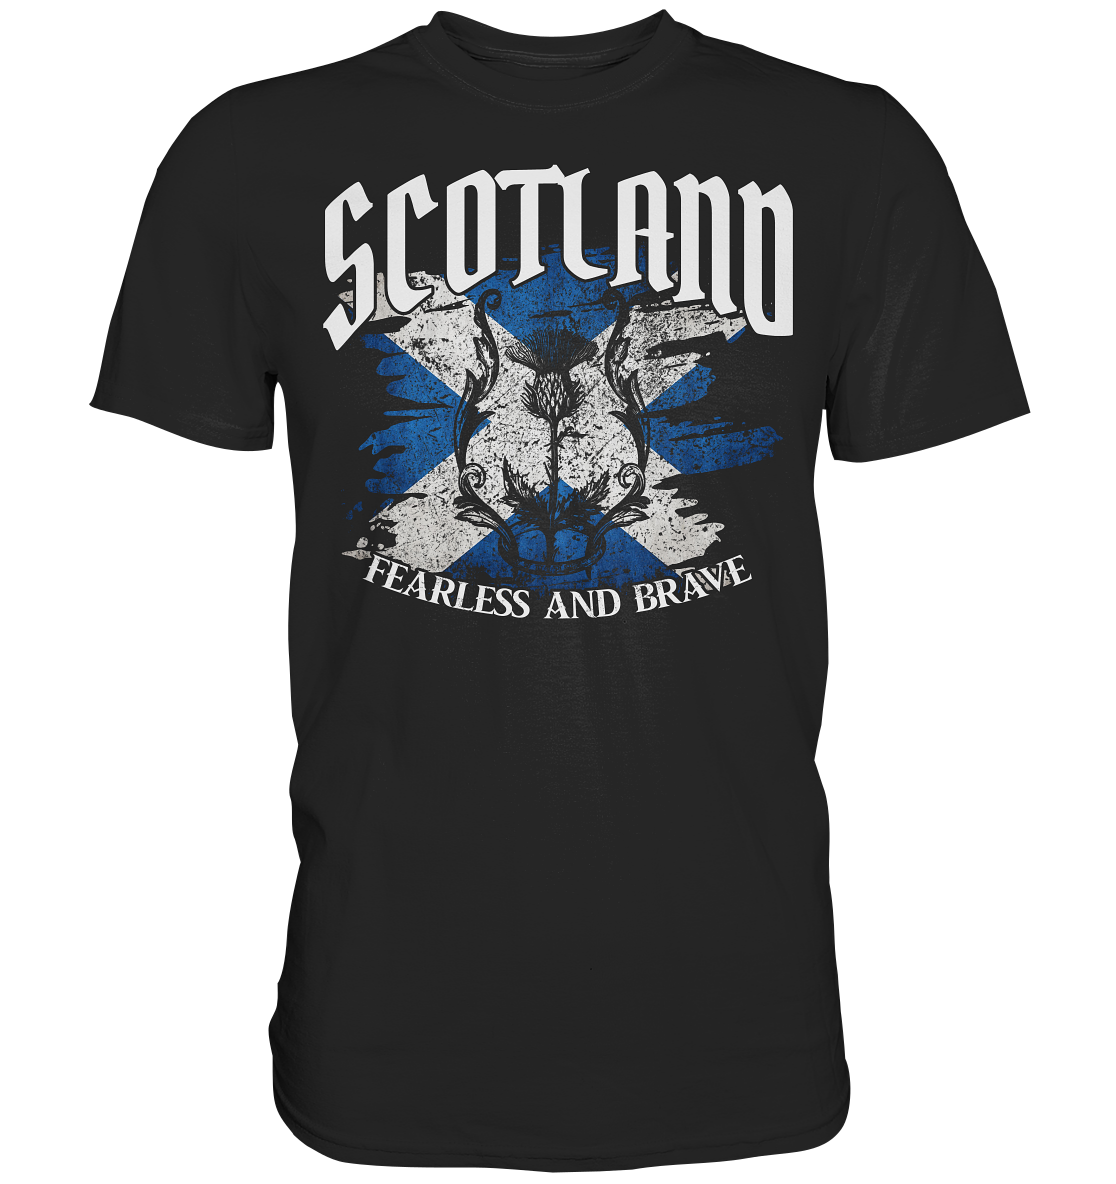 Scotland "Fearless and Brave / Splatter" - Premium Shirt